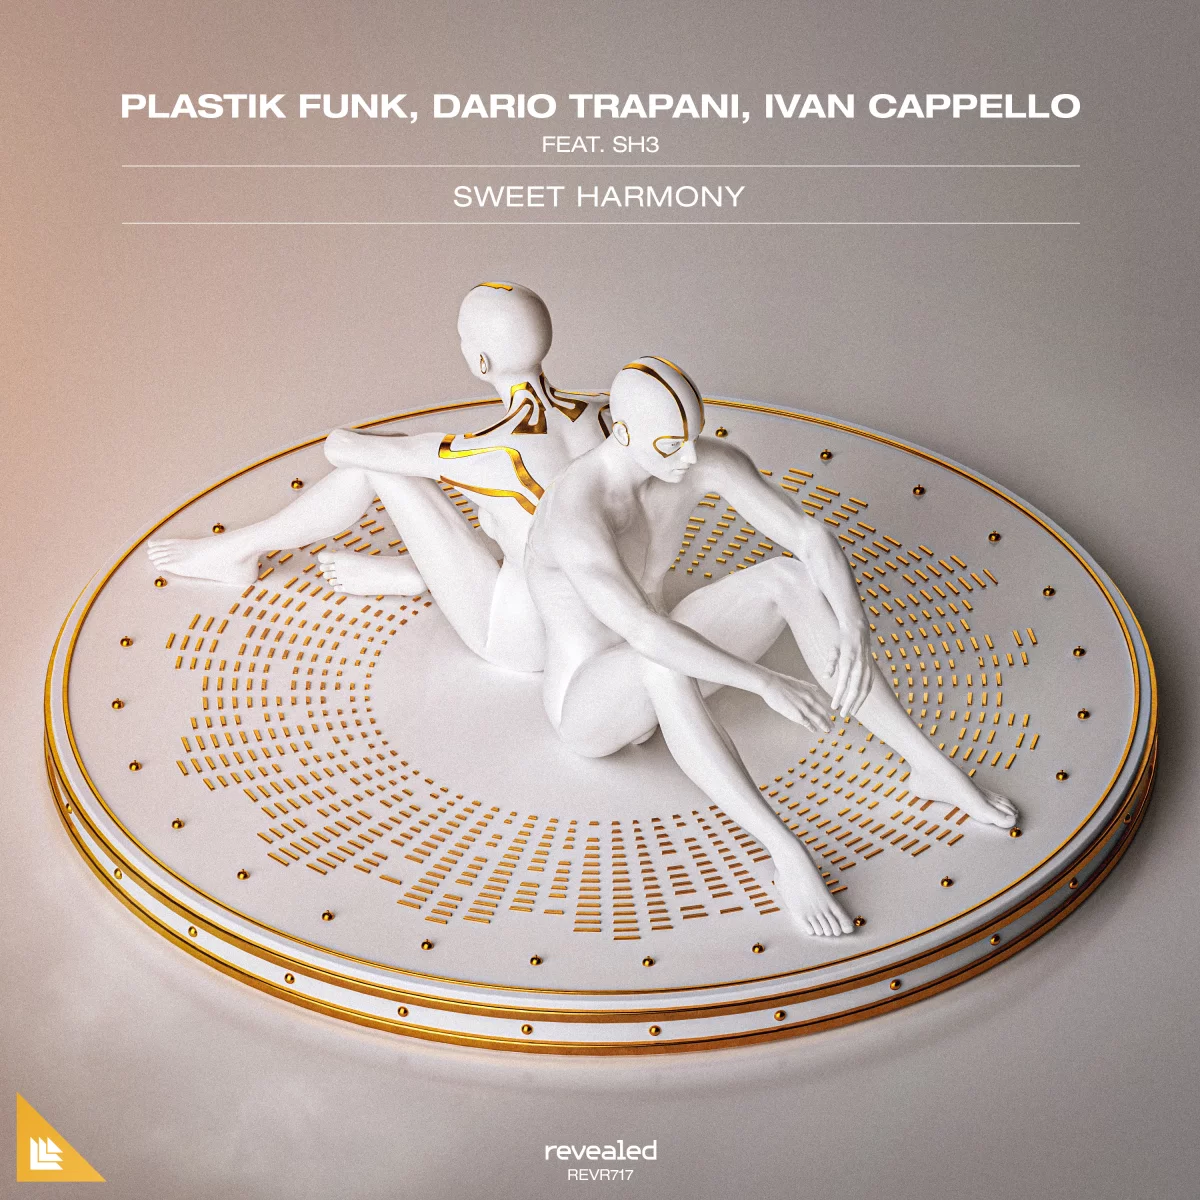 Sweet Harmony - Plastik Funk⁠, Dario Trapani⁠, Ivan Cappello⁠ feat. SH3⁠ 